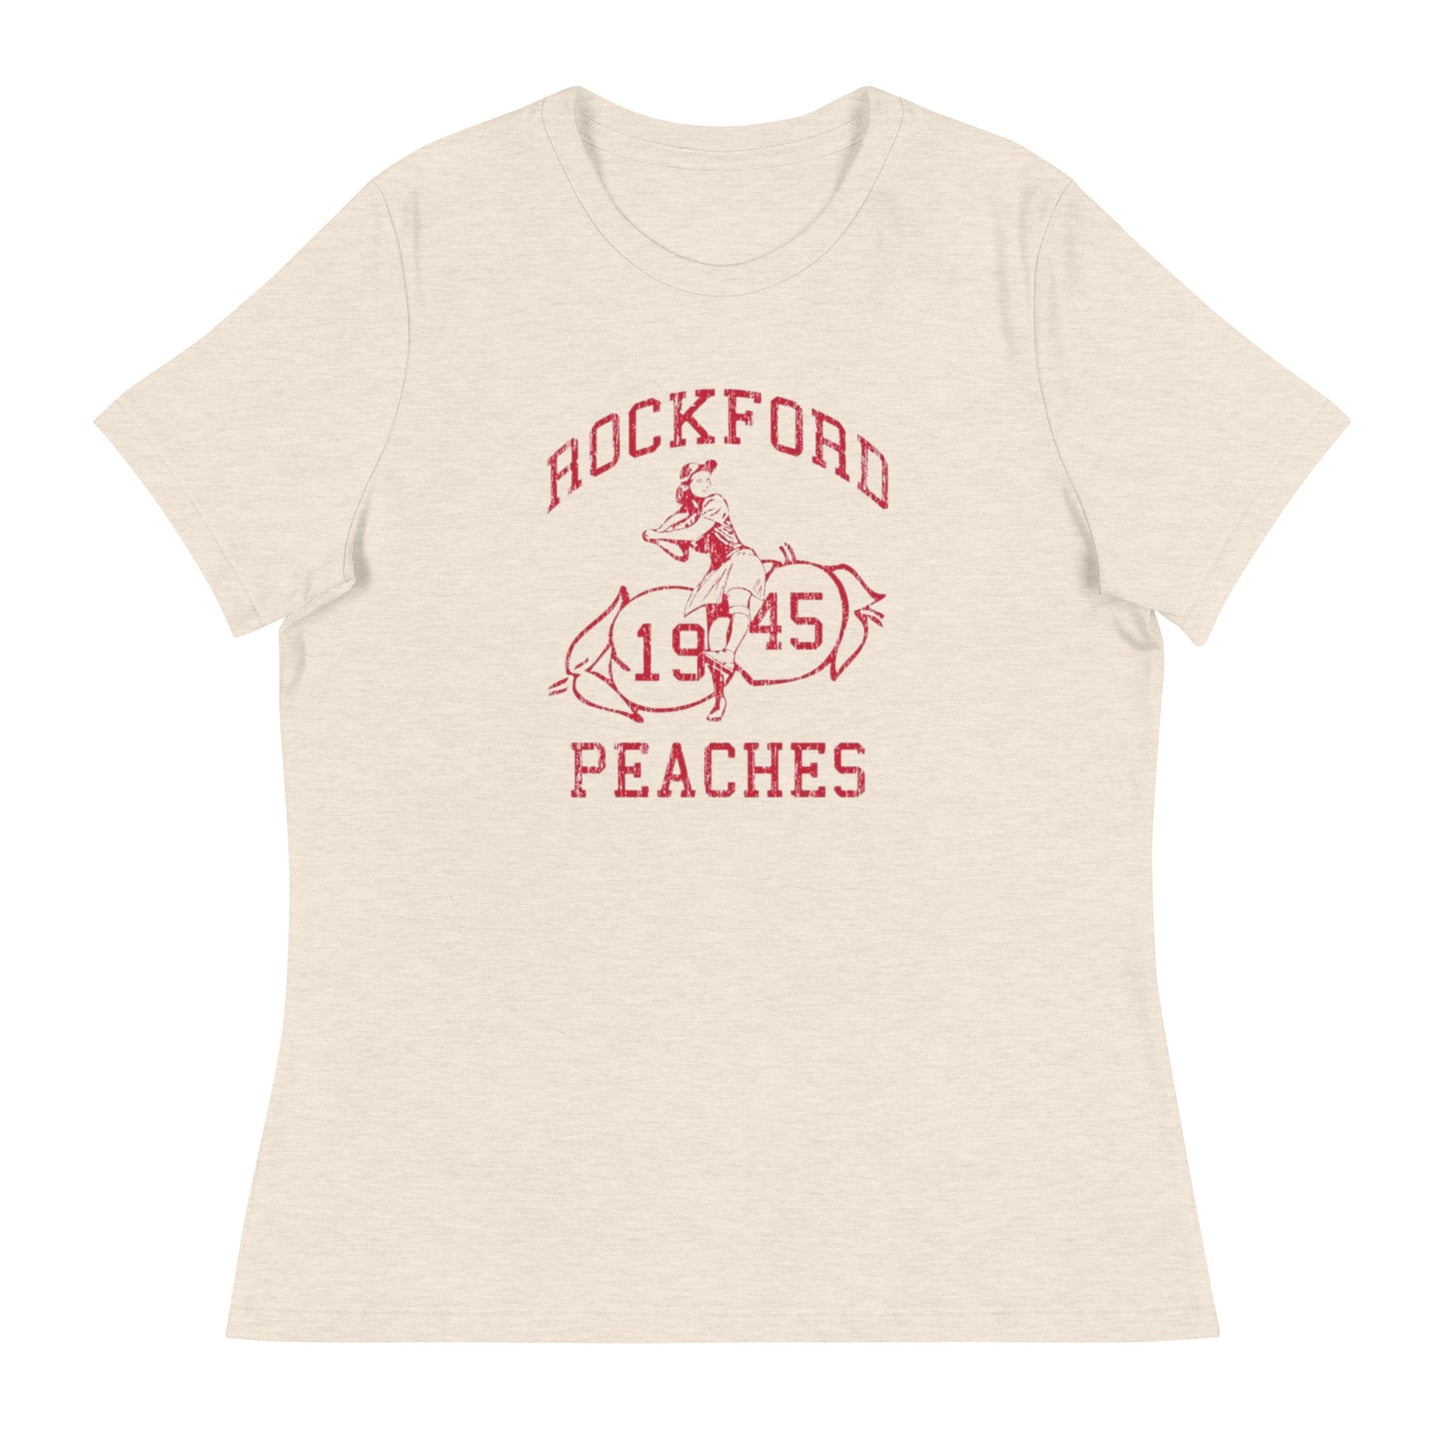 Rockford Peaches Tee